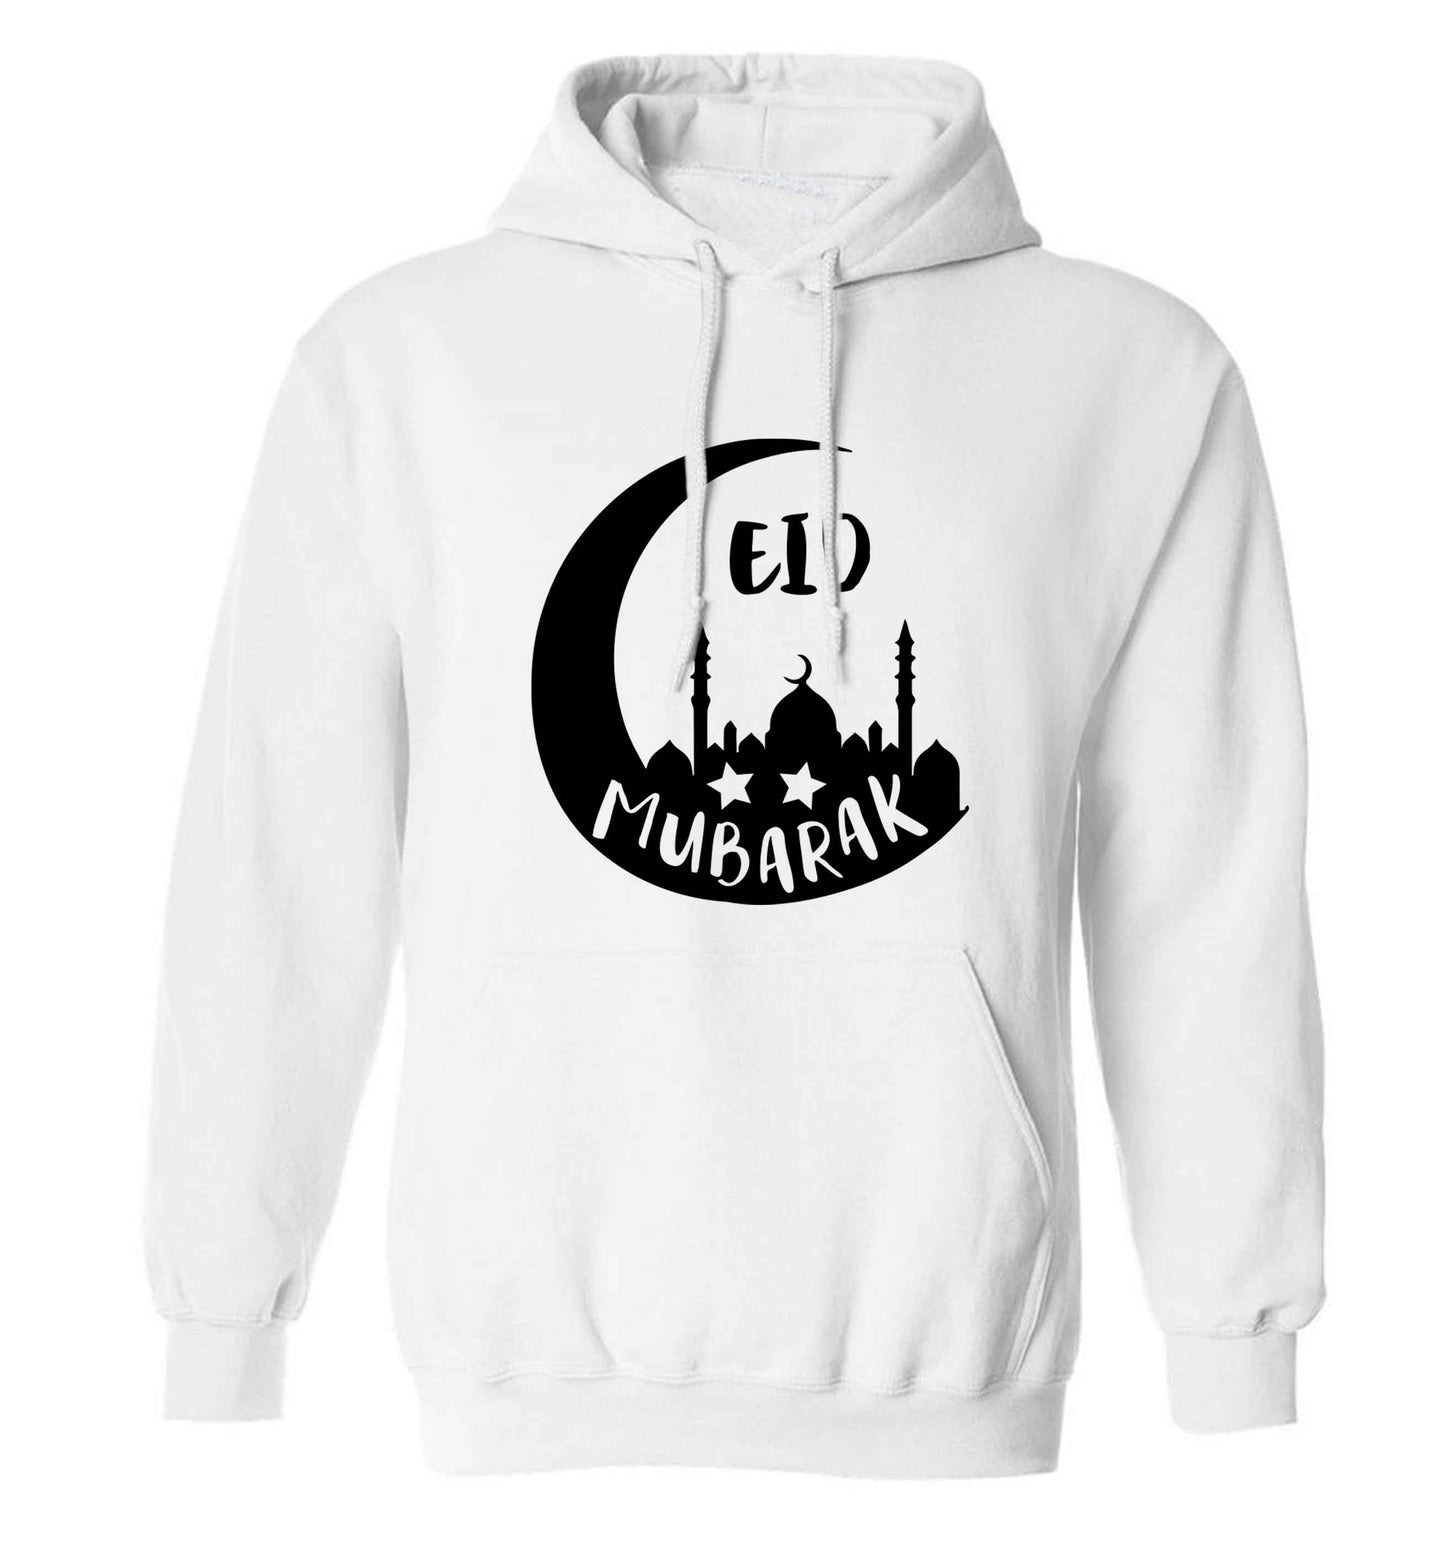 Eid mubarak adults unisex white hoodie 2XL